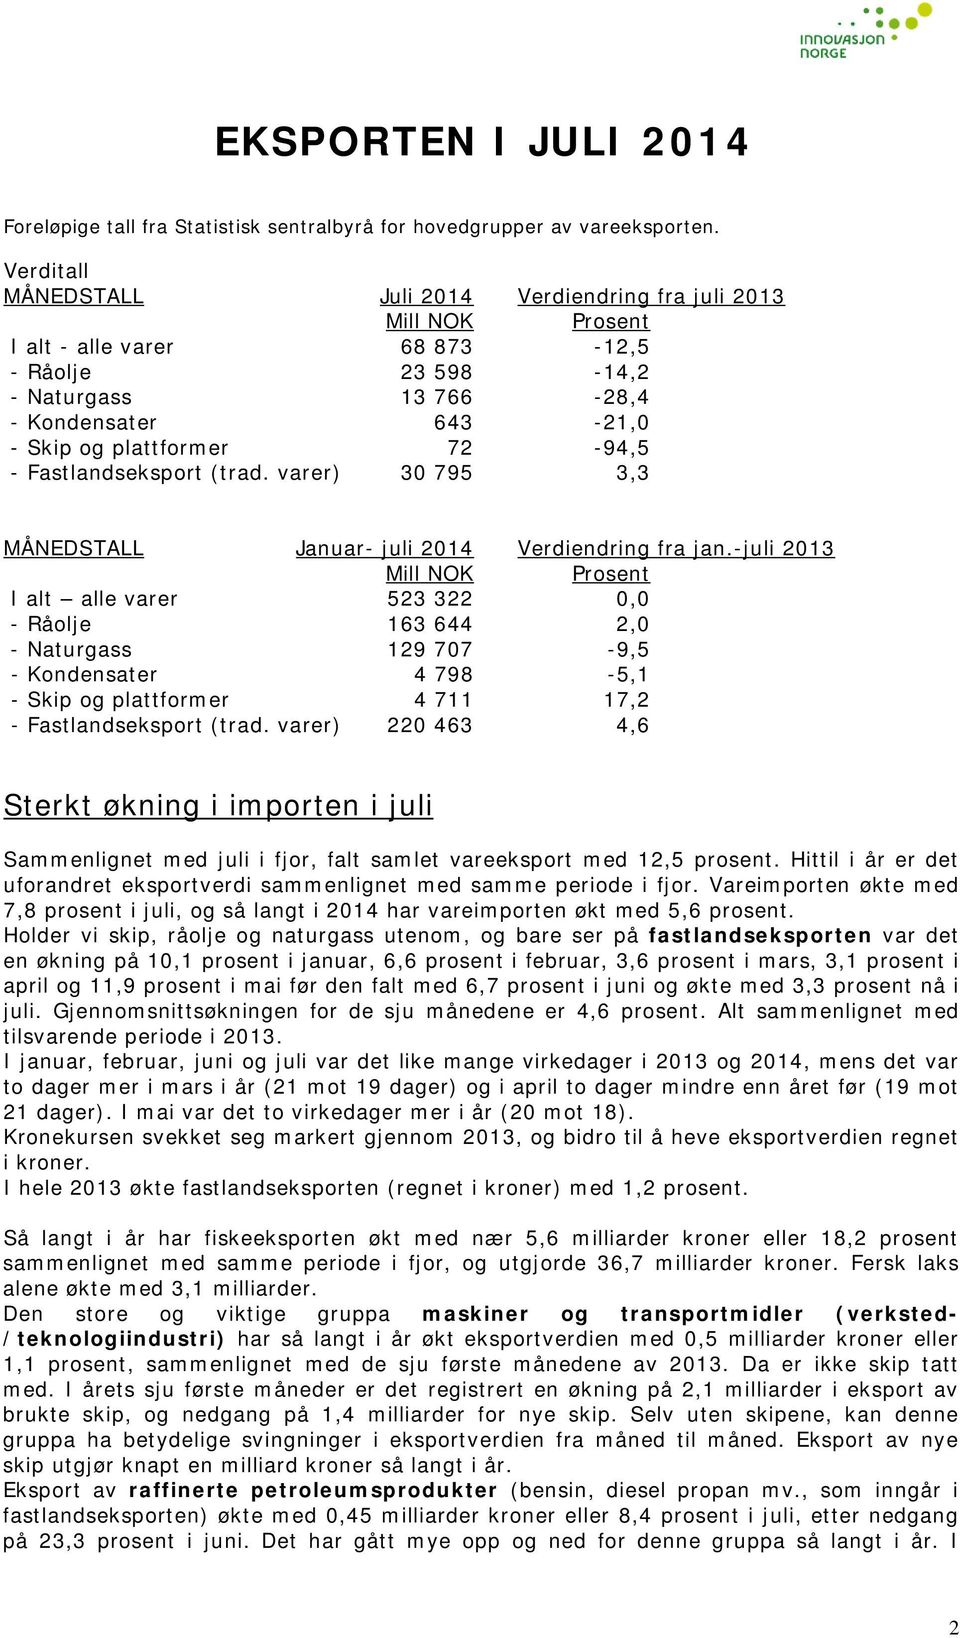 72-94,5 - Fastlandseksport (trad. varer) 30 795 3,3 MÅNEDSTALL Januar- juli 2014 Verdiendring fra jan.